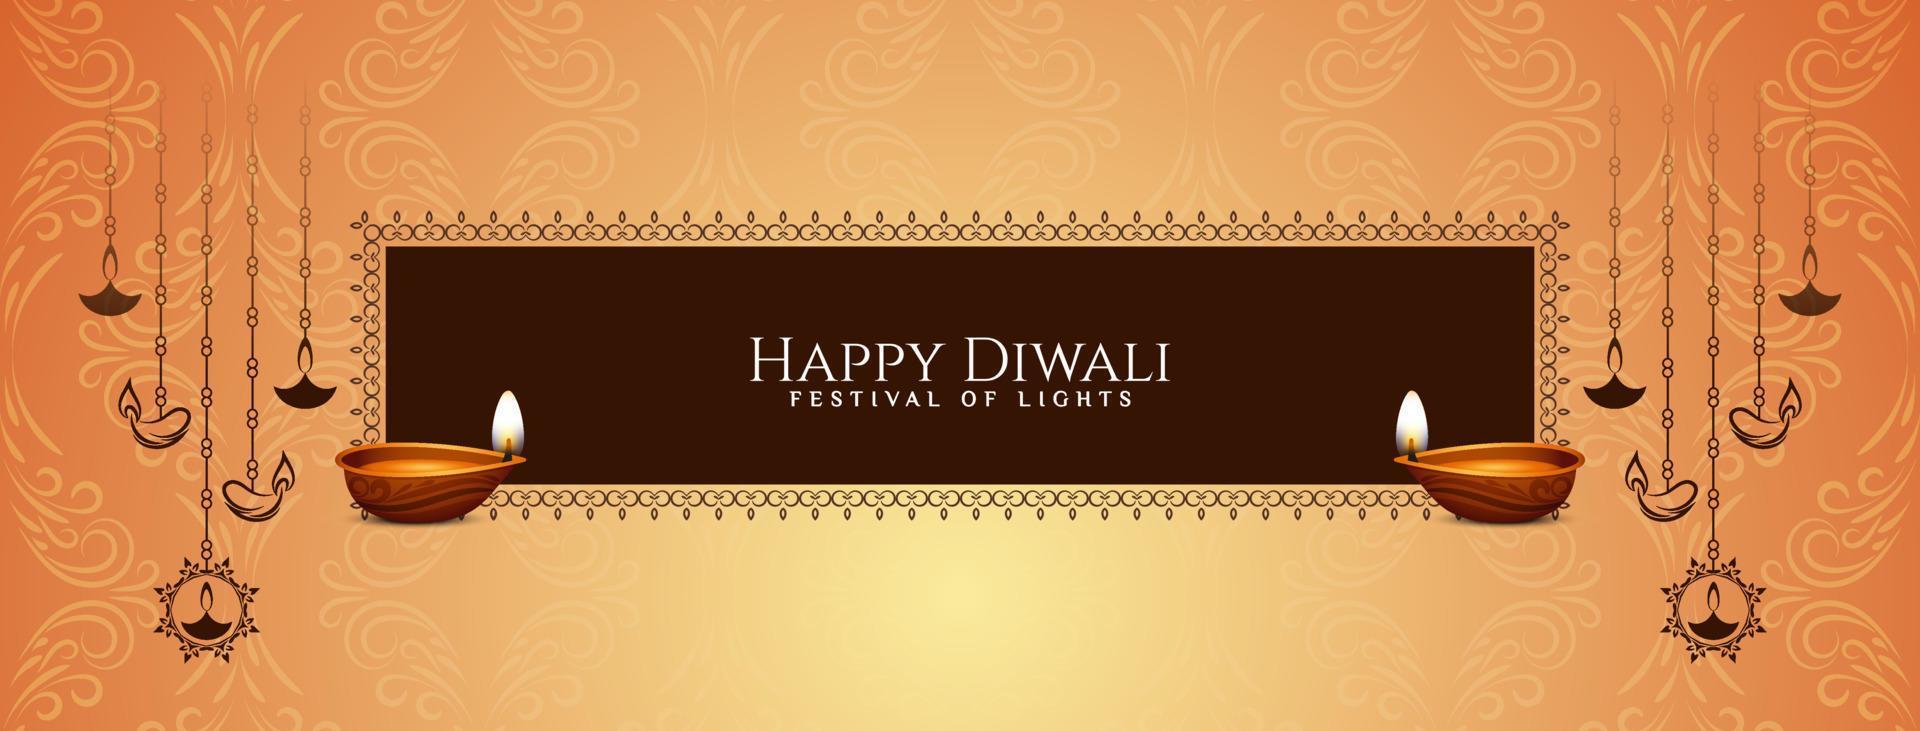 Happy Diwali festival decorative banner with elegant hanging lamps design vector